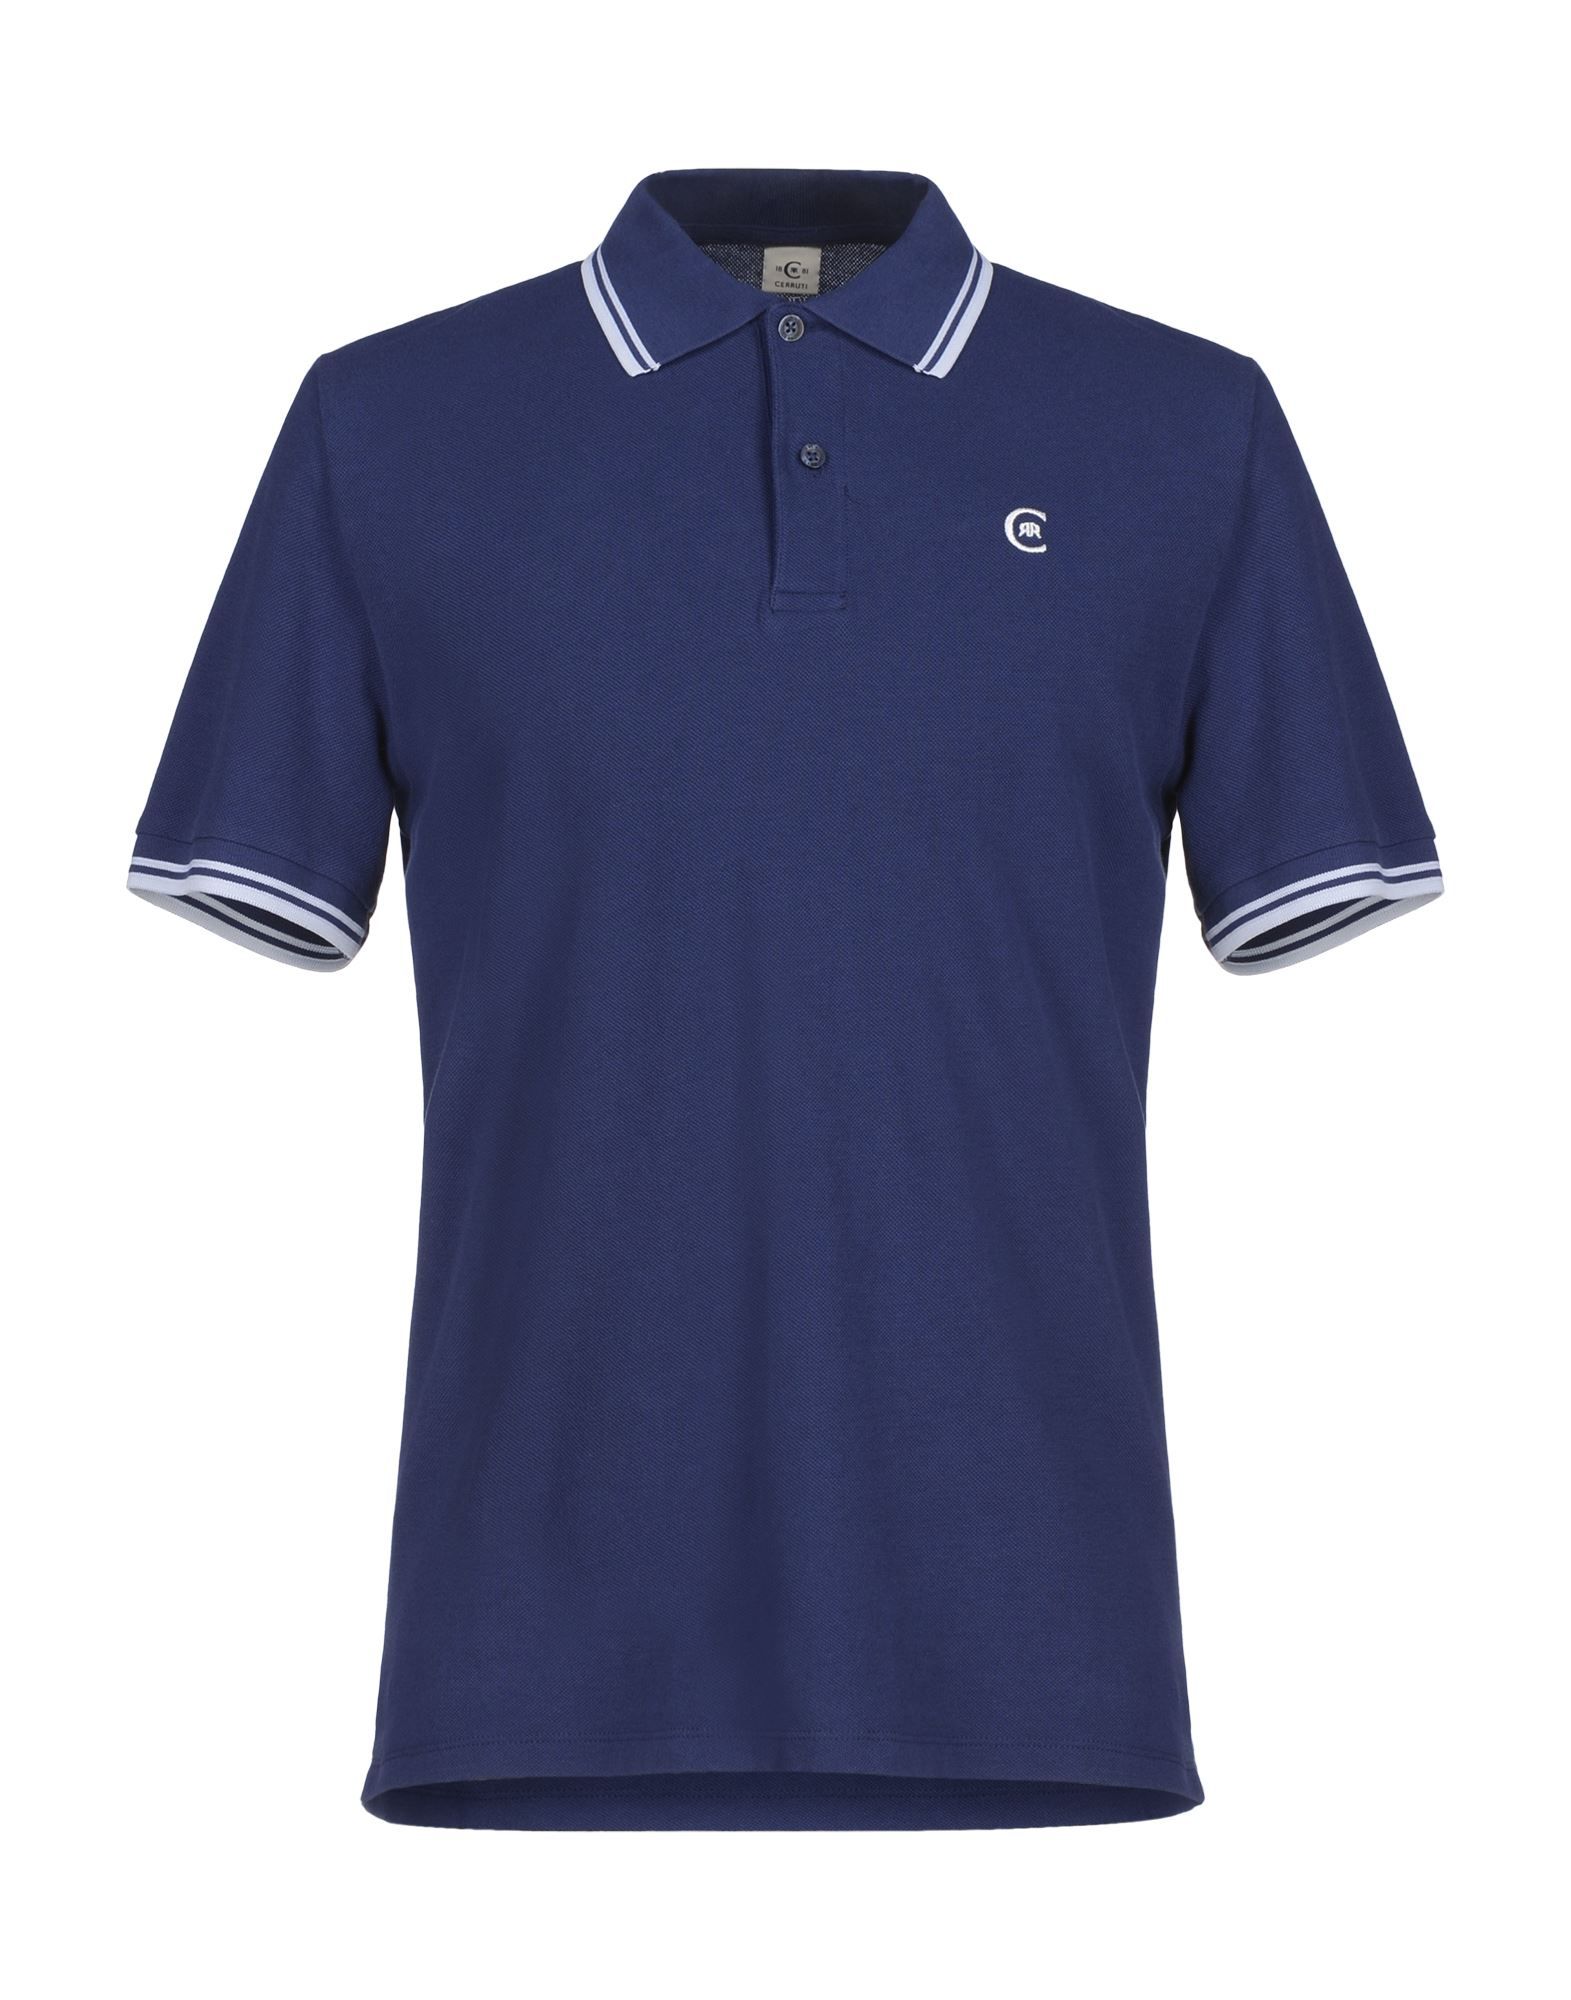 Cerruti 1881 Blue Cotton Short Sleeve Polo Shirt